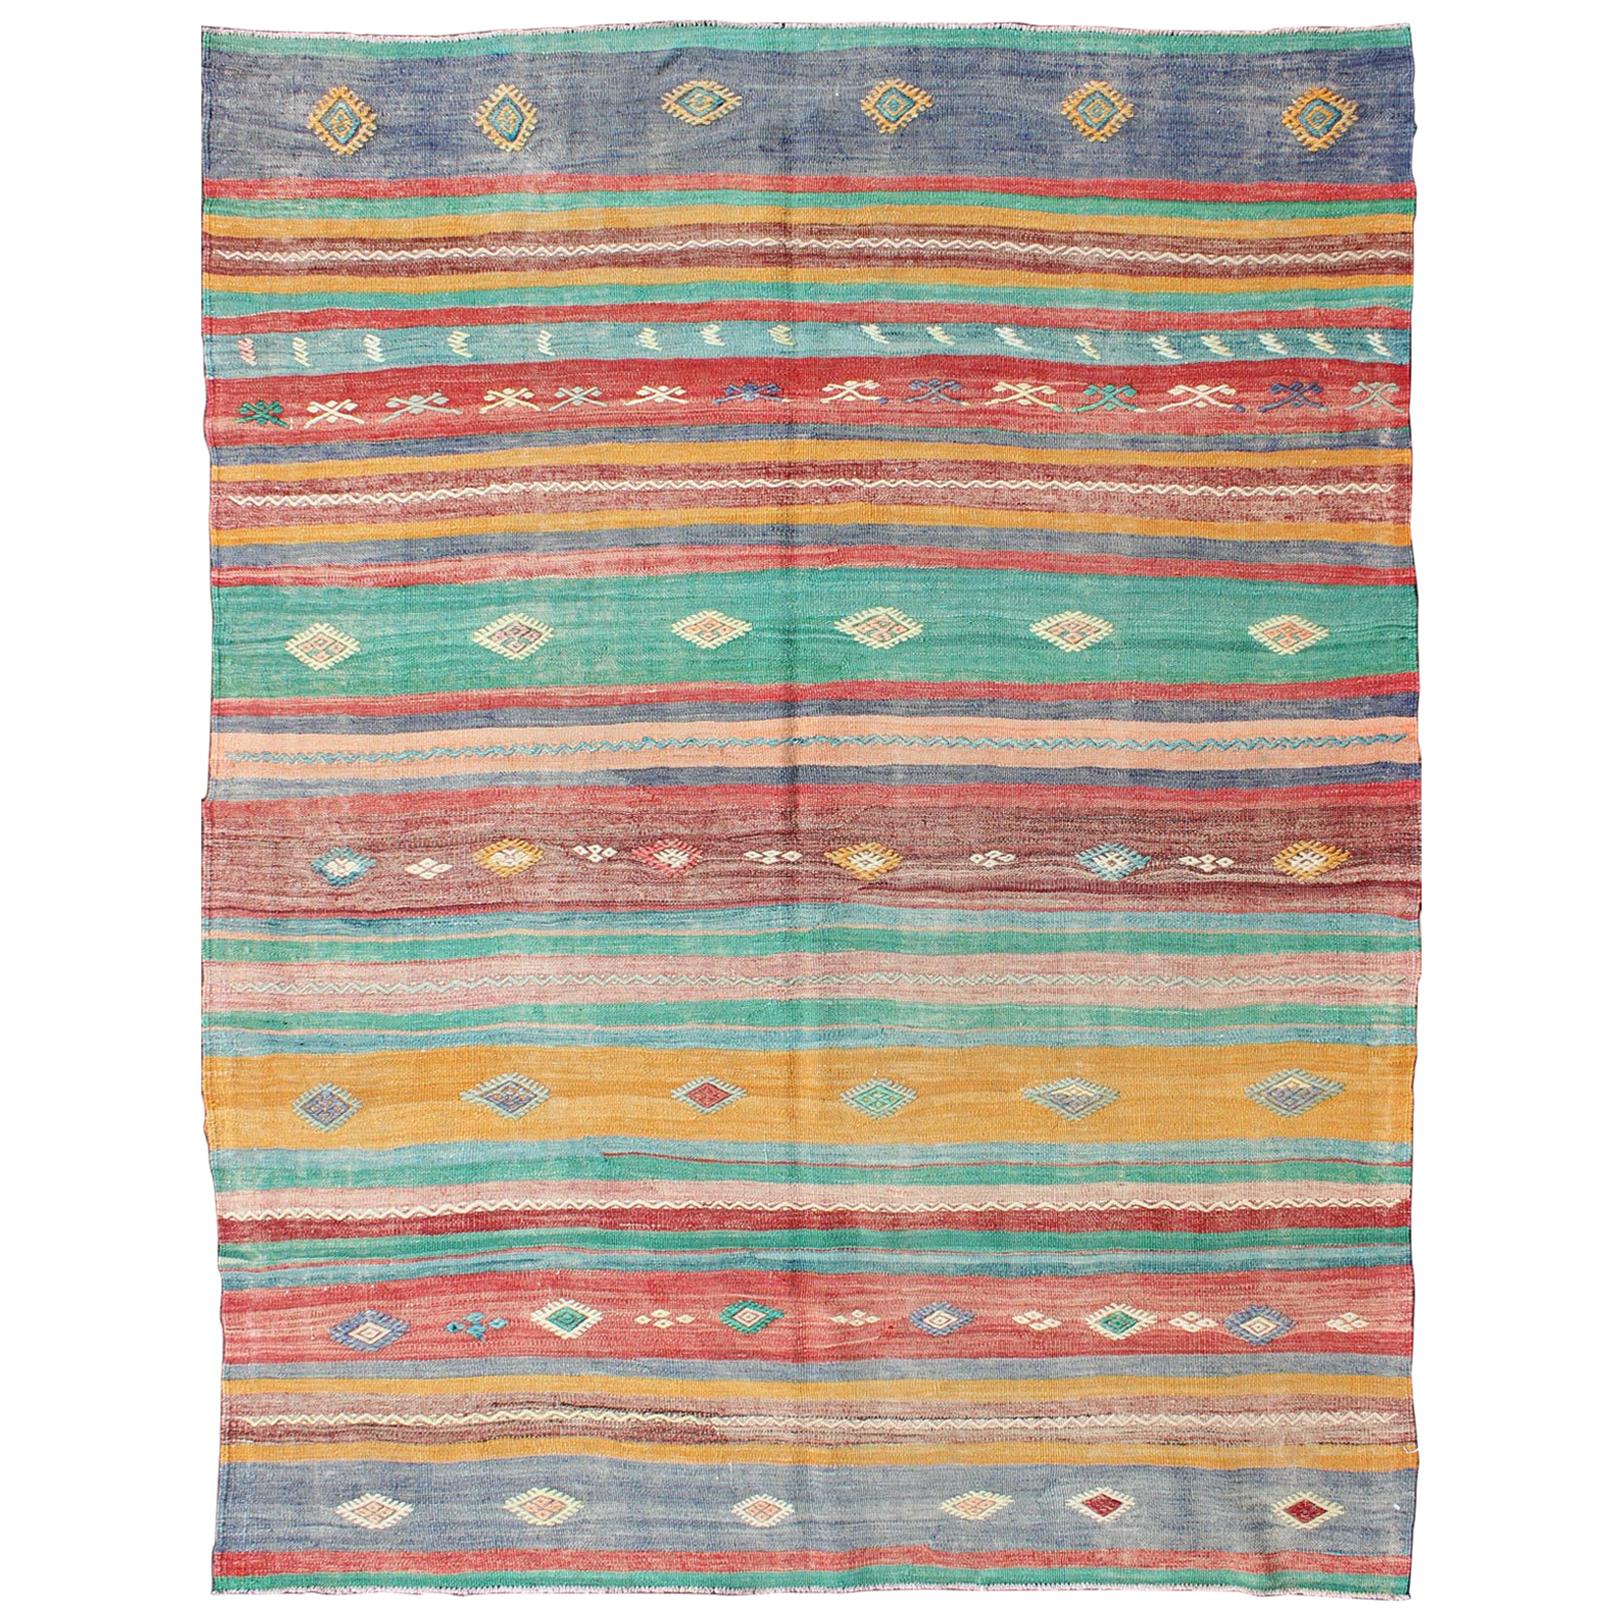 Bright and Colorful Flat-Weave Turkish Kilim Rug with Geometric Stripe Design